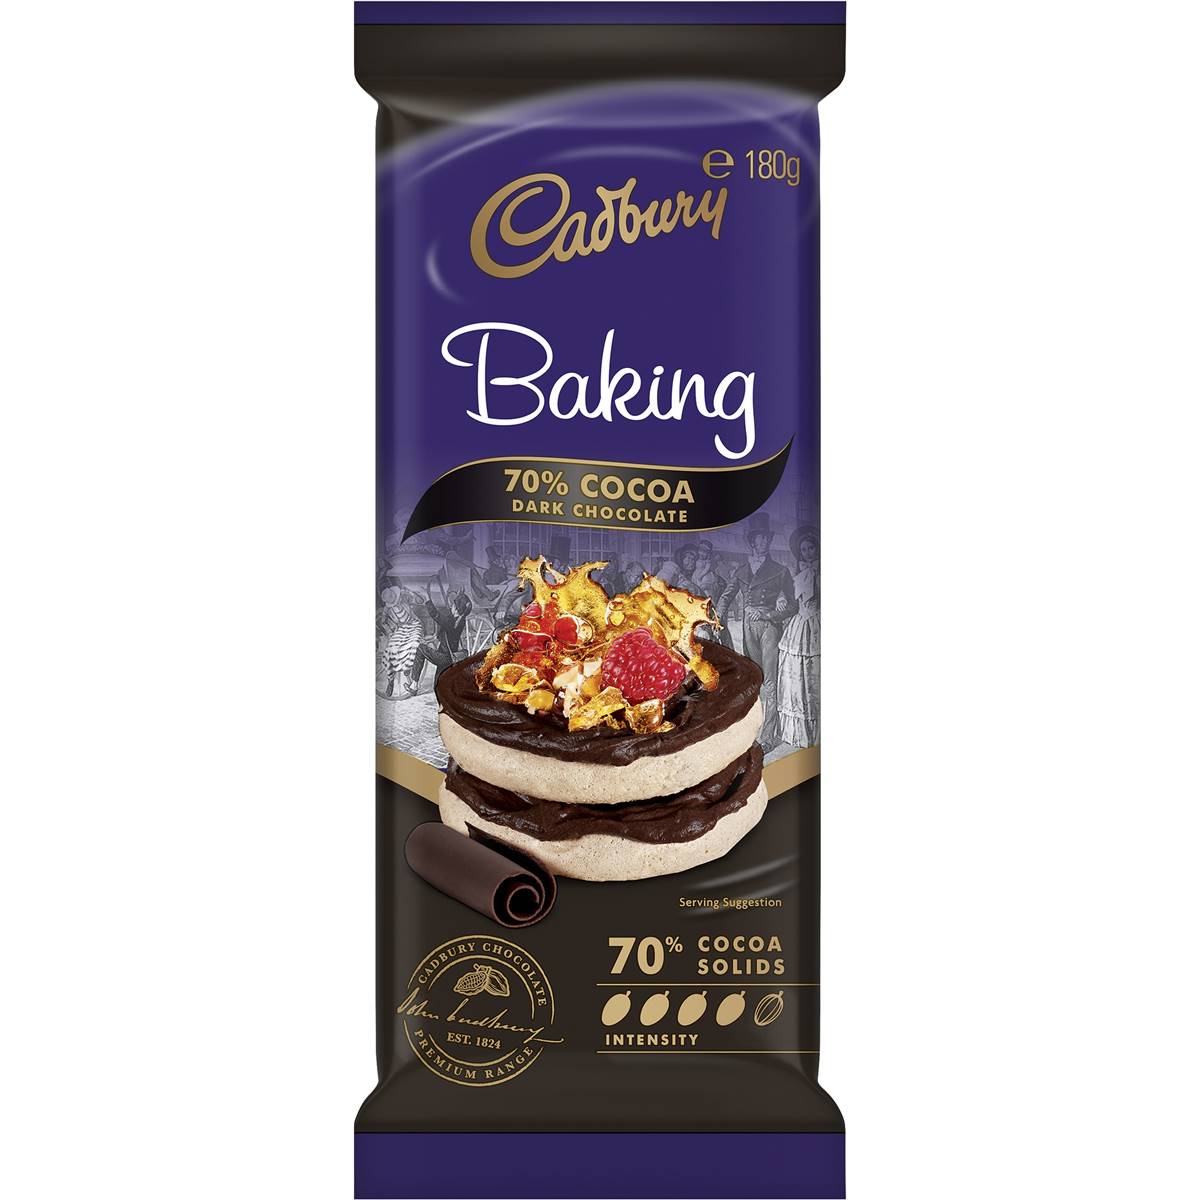 Cadbury Baking Chocolate 70% Cocoa 180g